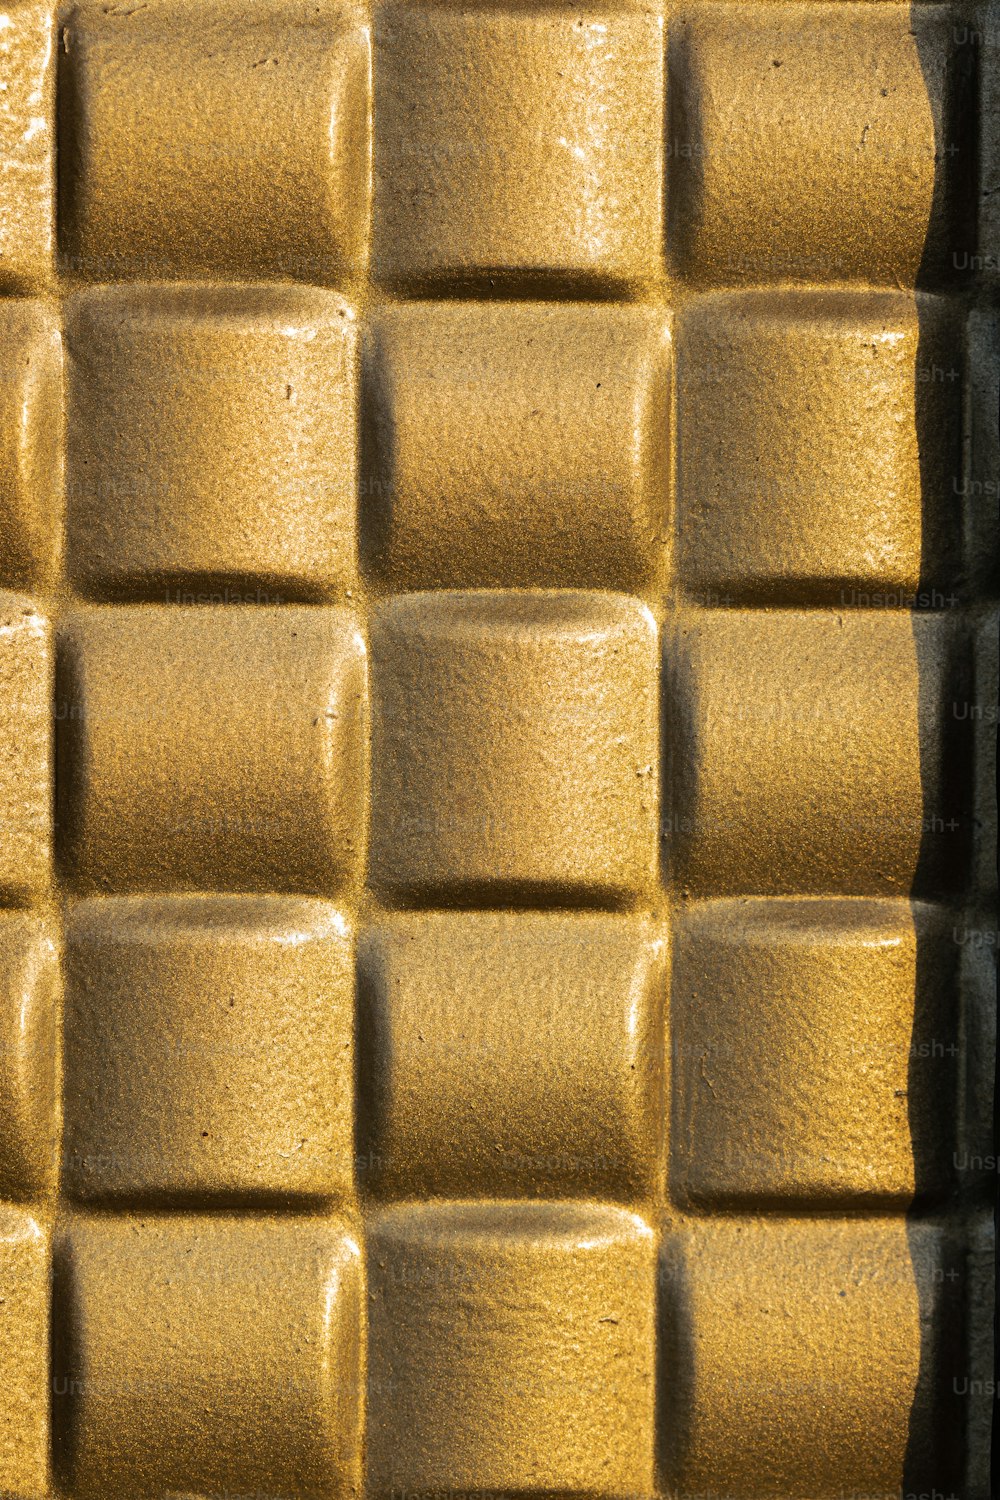 a close up of a wall made of yellow bricks